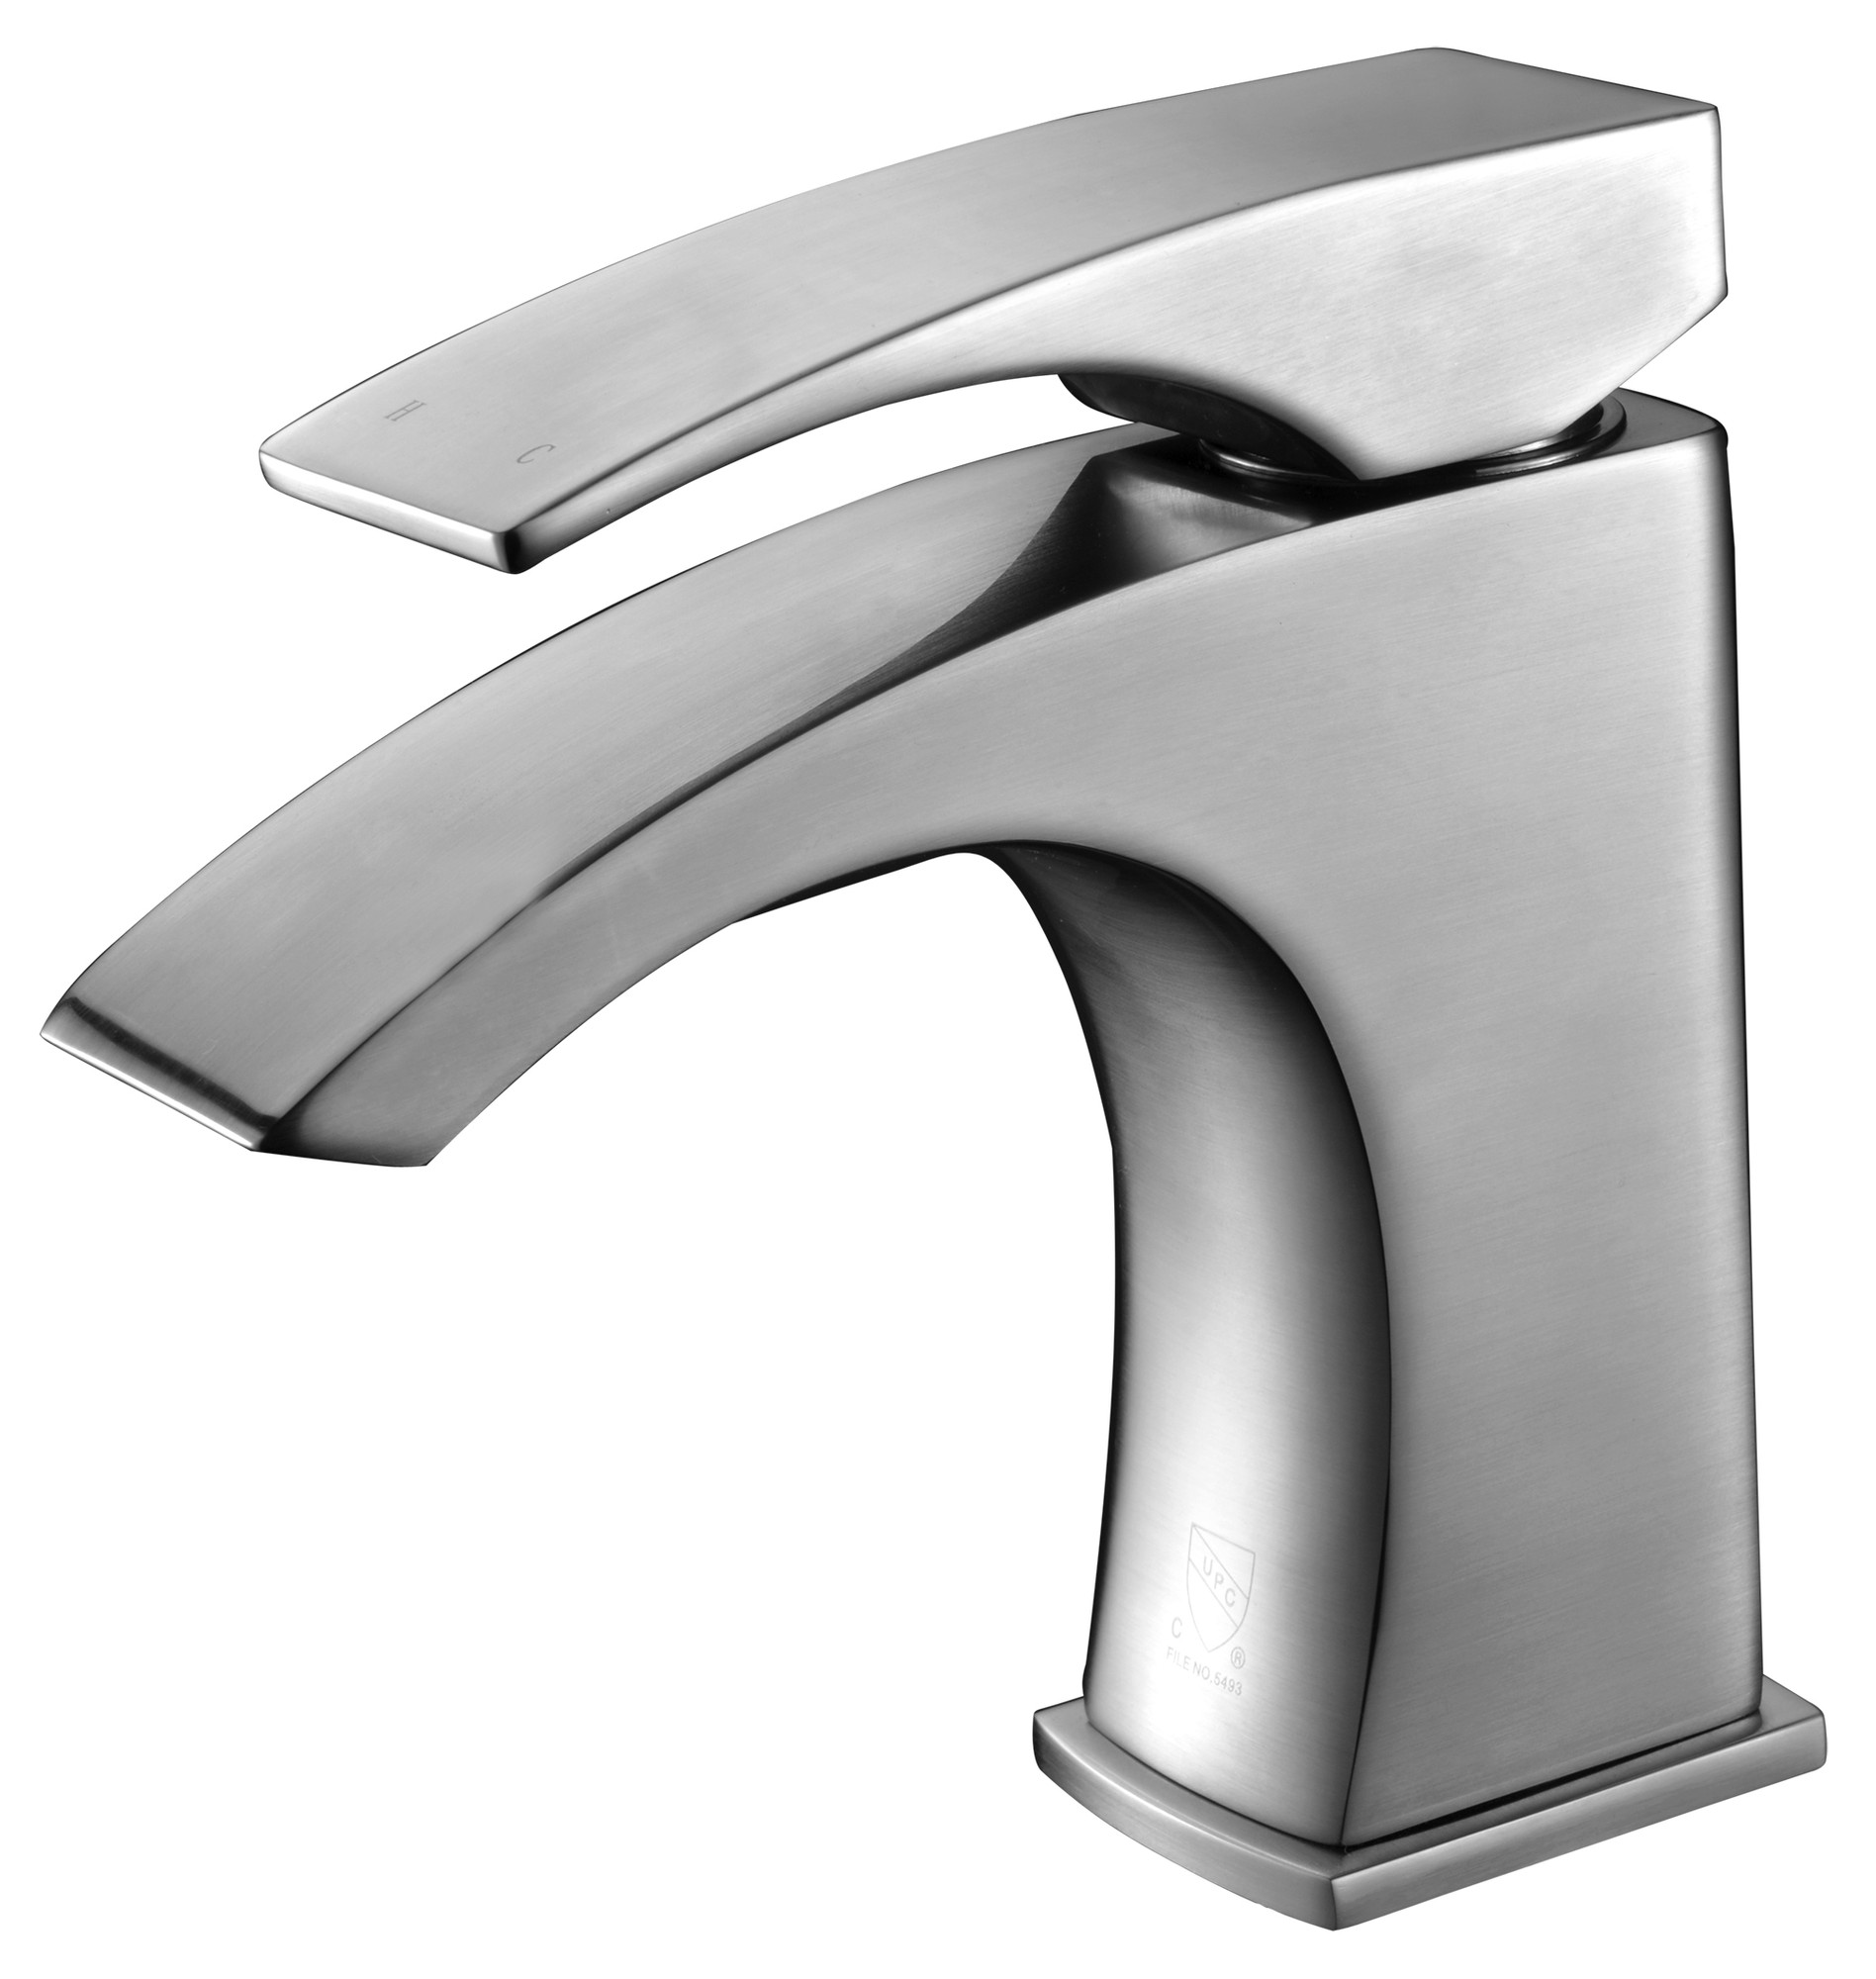 ALFI brand AB1586-BN Brushed Nickel Single Lever Bathroom Faucet